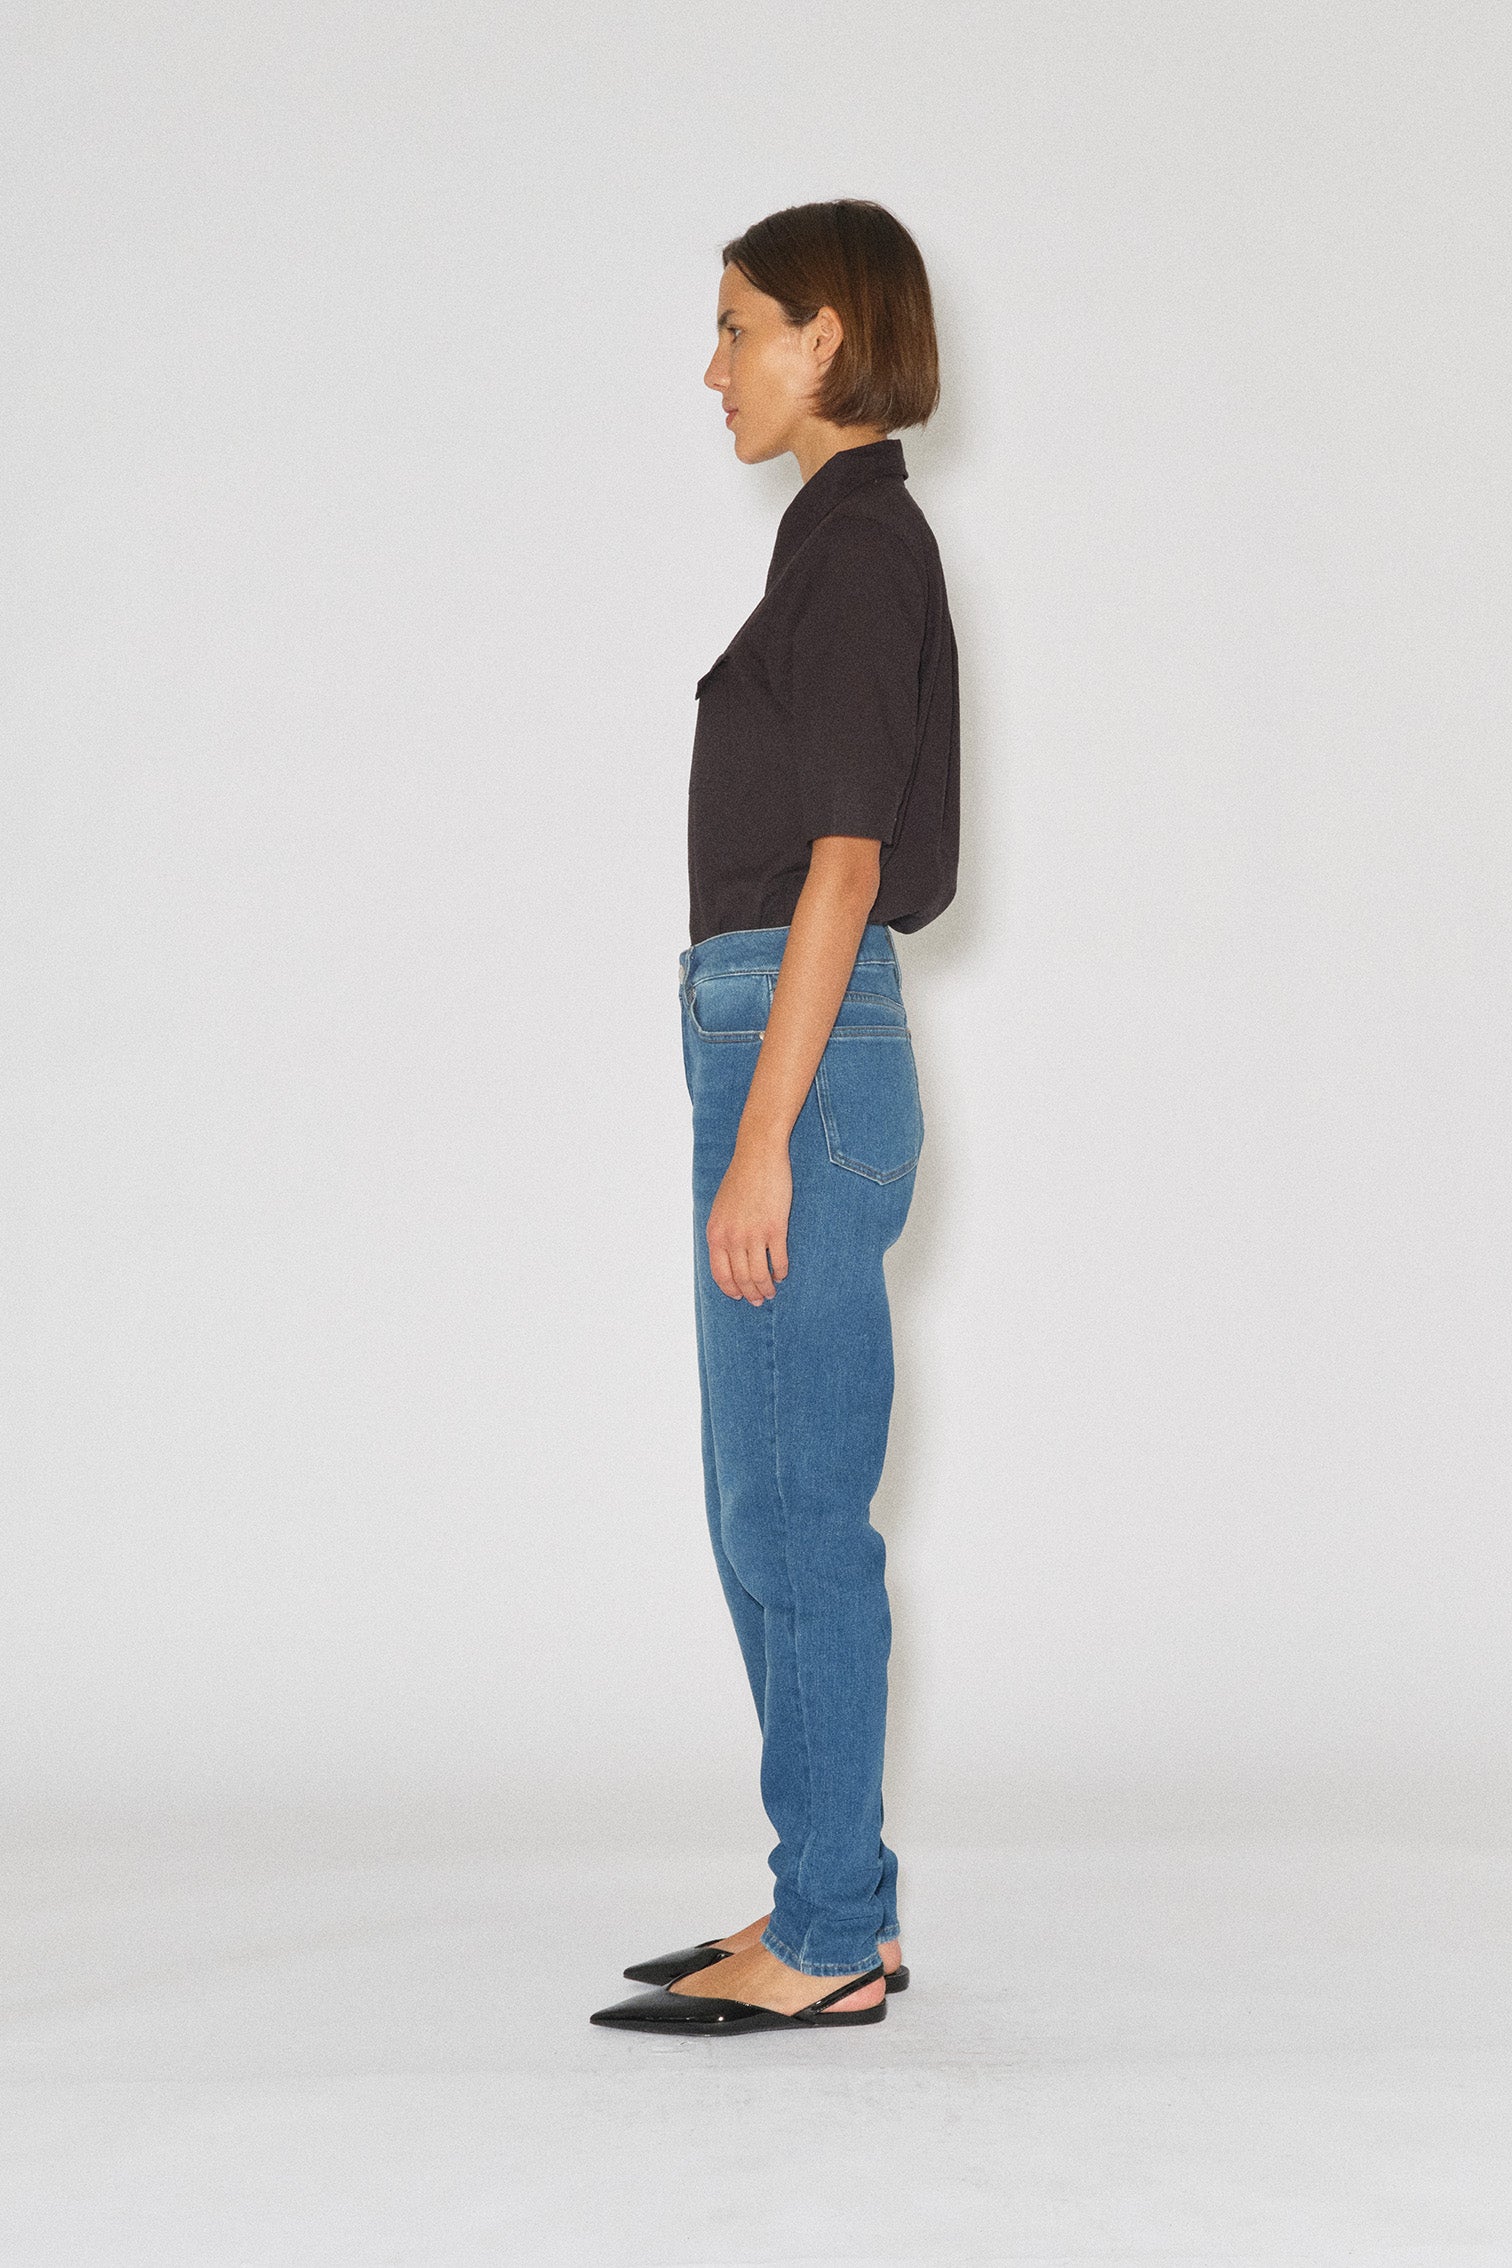 Tomorrow TMRW Hepburn Jeans - Bilbao Jeans & Pants 51 Denim Blue